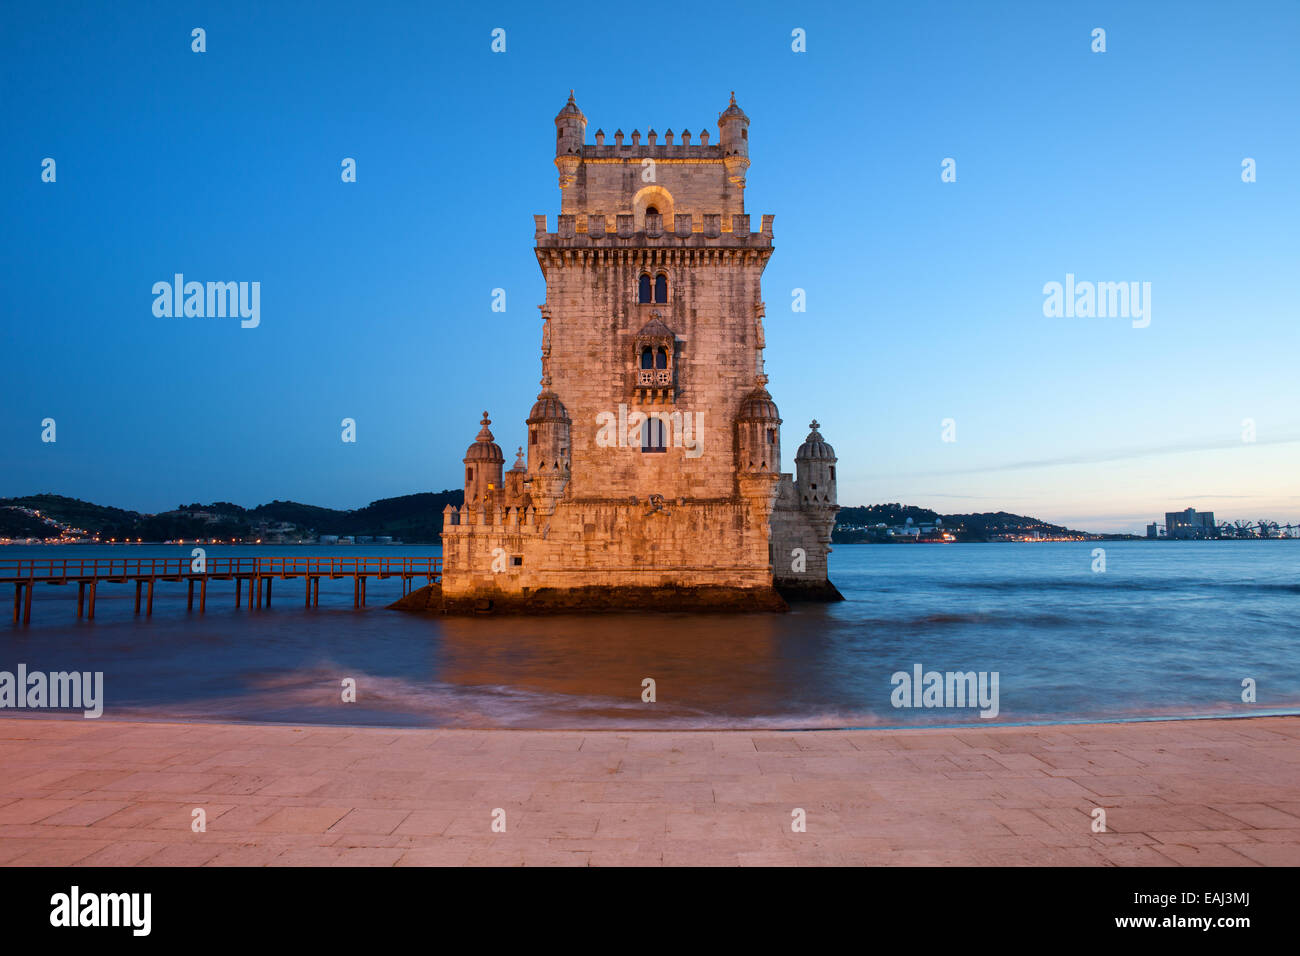 Belem Tower (Portuguese: Torre de Belem) at night in Lisbon, Portugal. Stock Photo